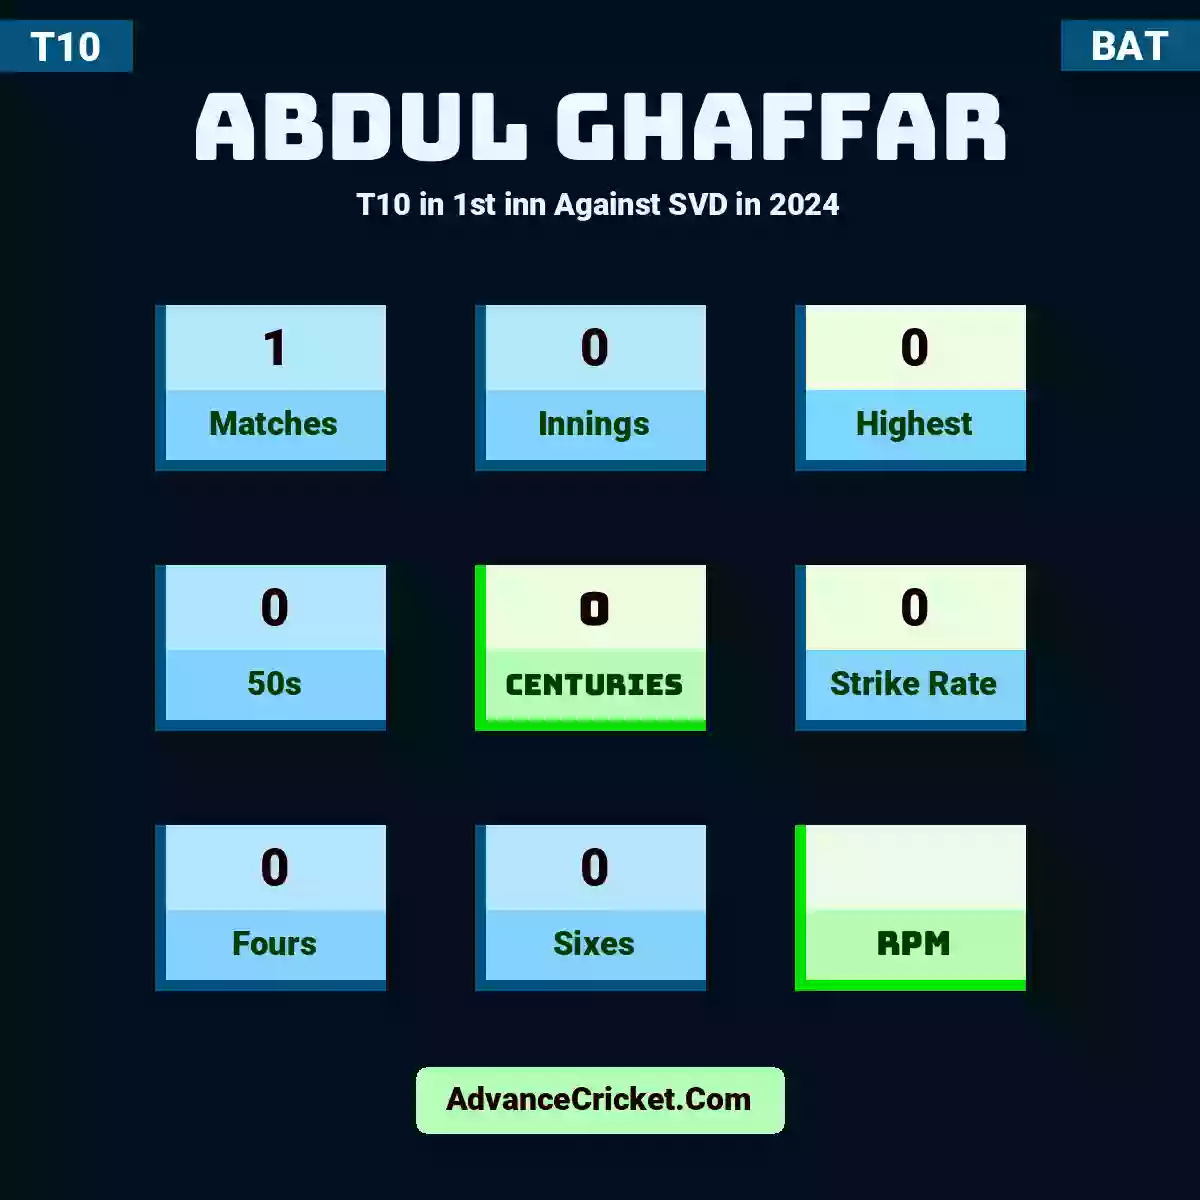 Abdul Ghaffar T10  in 1st inn Against SVD in 2024, Abdul Ghaffar played 1 matches, scored 0 runs as highest, 0 half-centuries, and 0 centuries, with a strike rate of 0. A.Ghaffar hit 0 fours and 0 sixes.